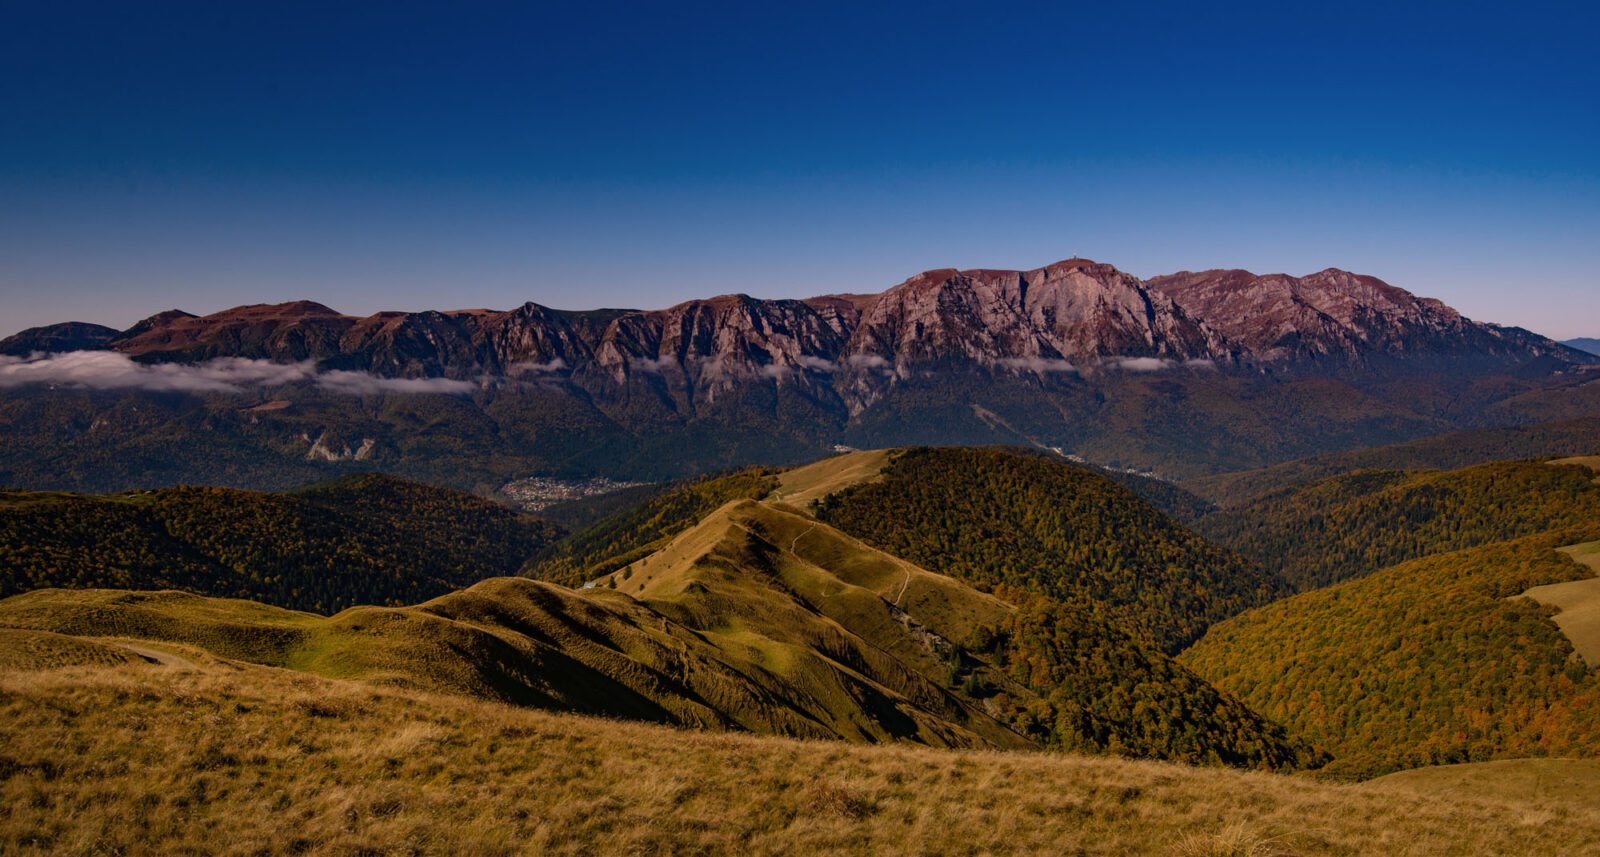 Bucegi mountains scene view from baiului mountains in Romania. G